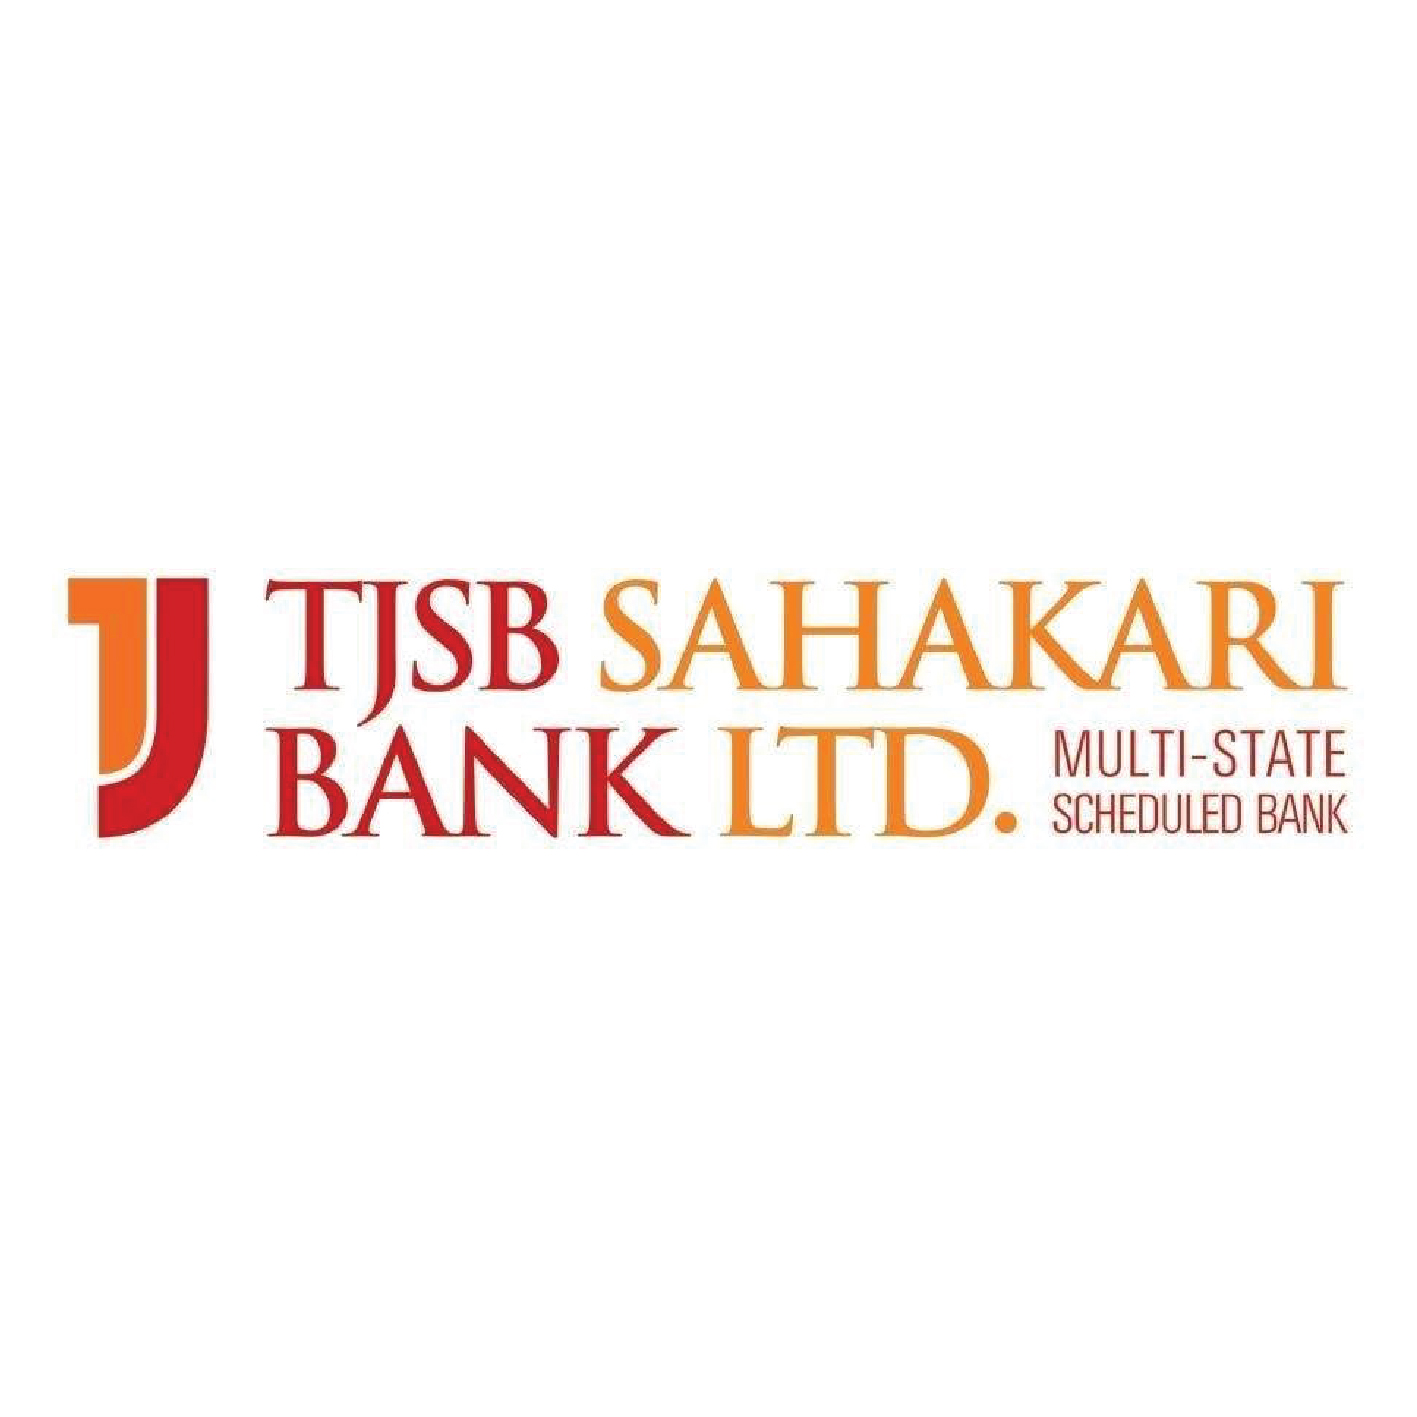 TJSB Sahakari Bank ltd - Client